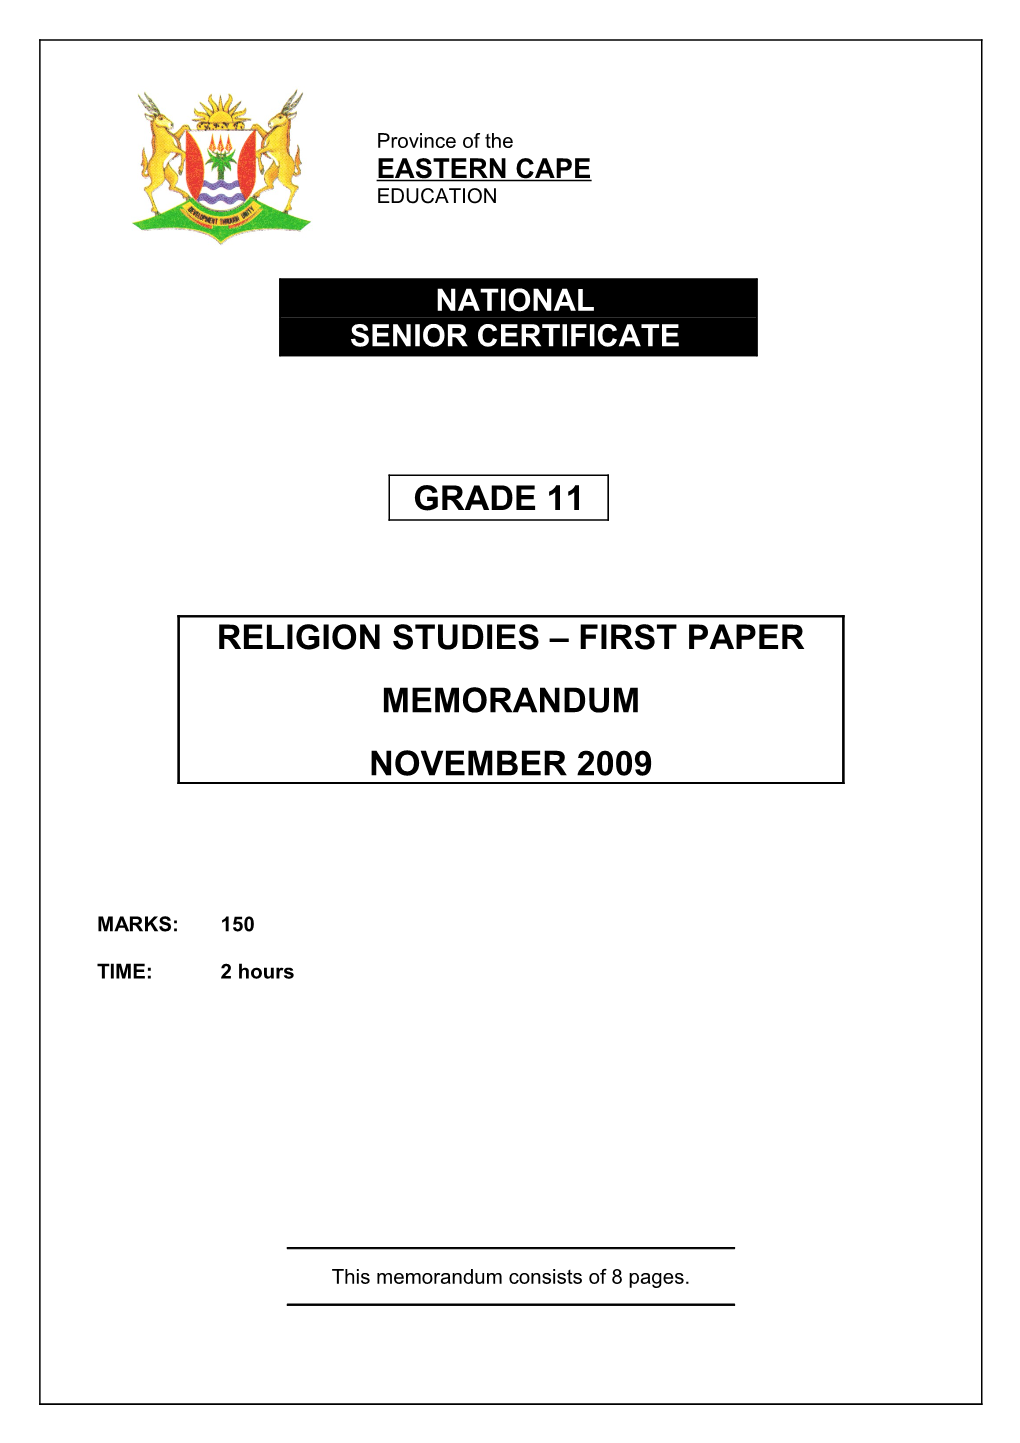 (November 2009) Religion Studies First Paper 7